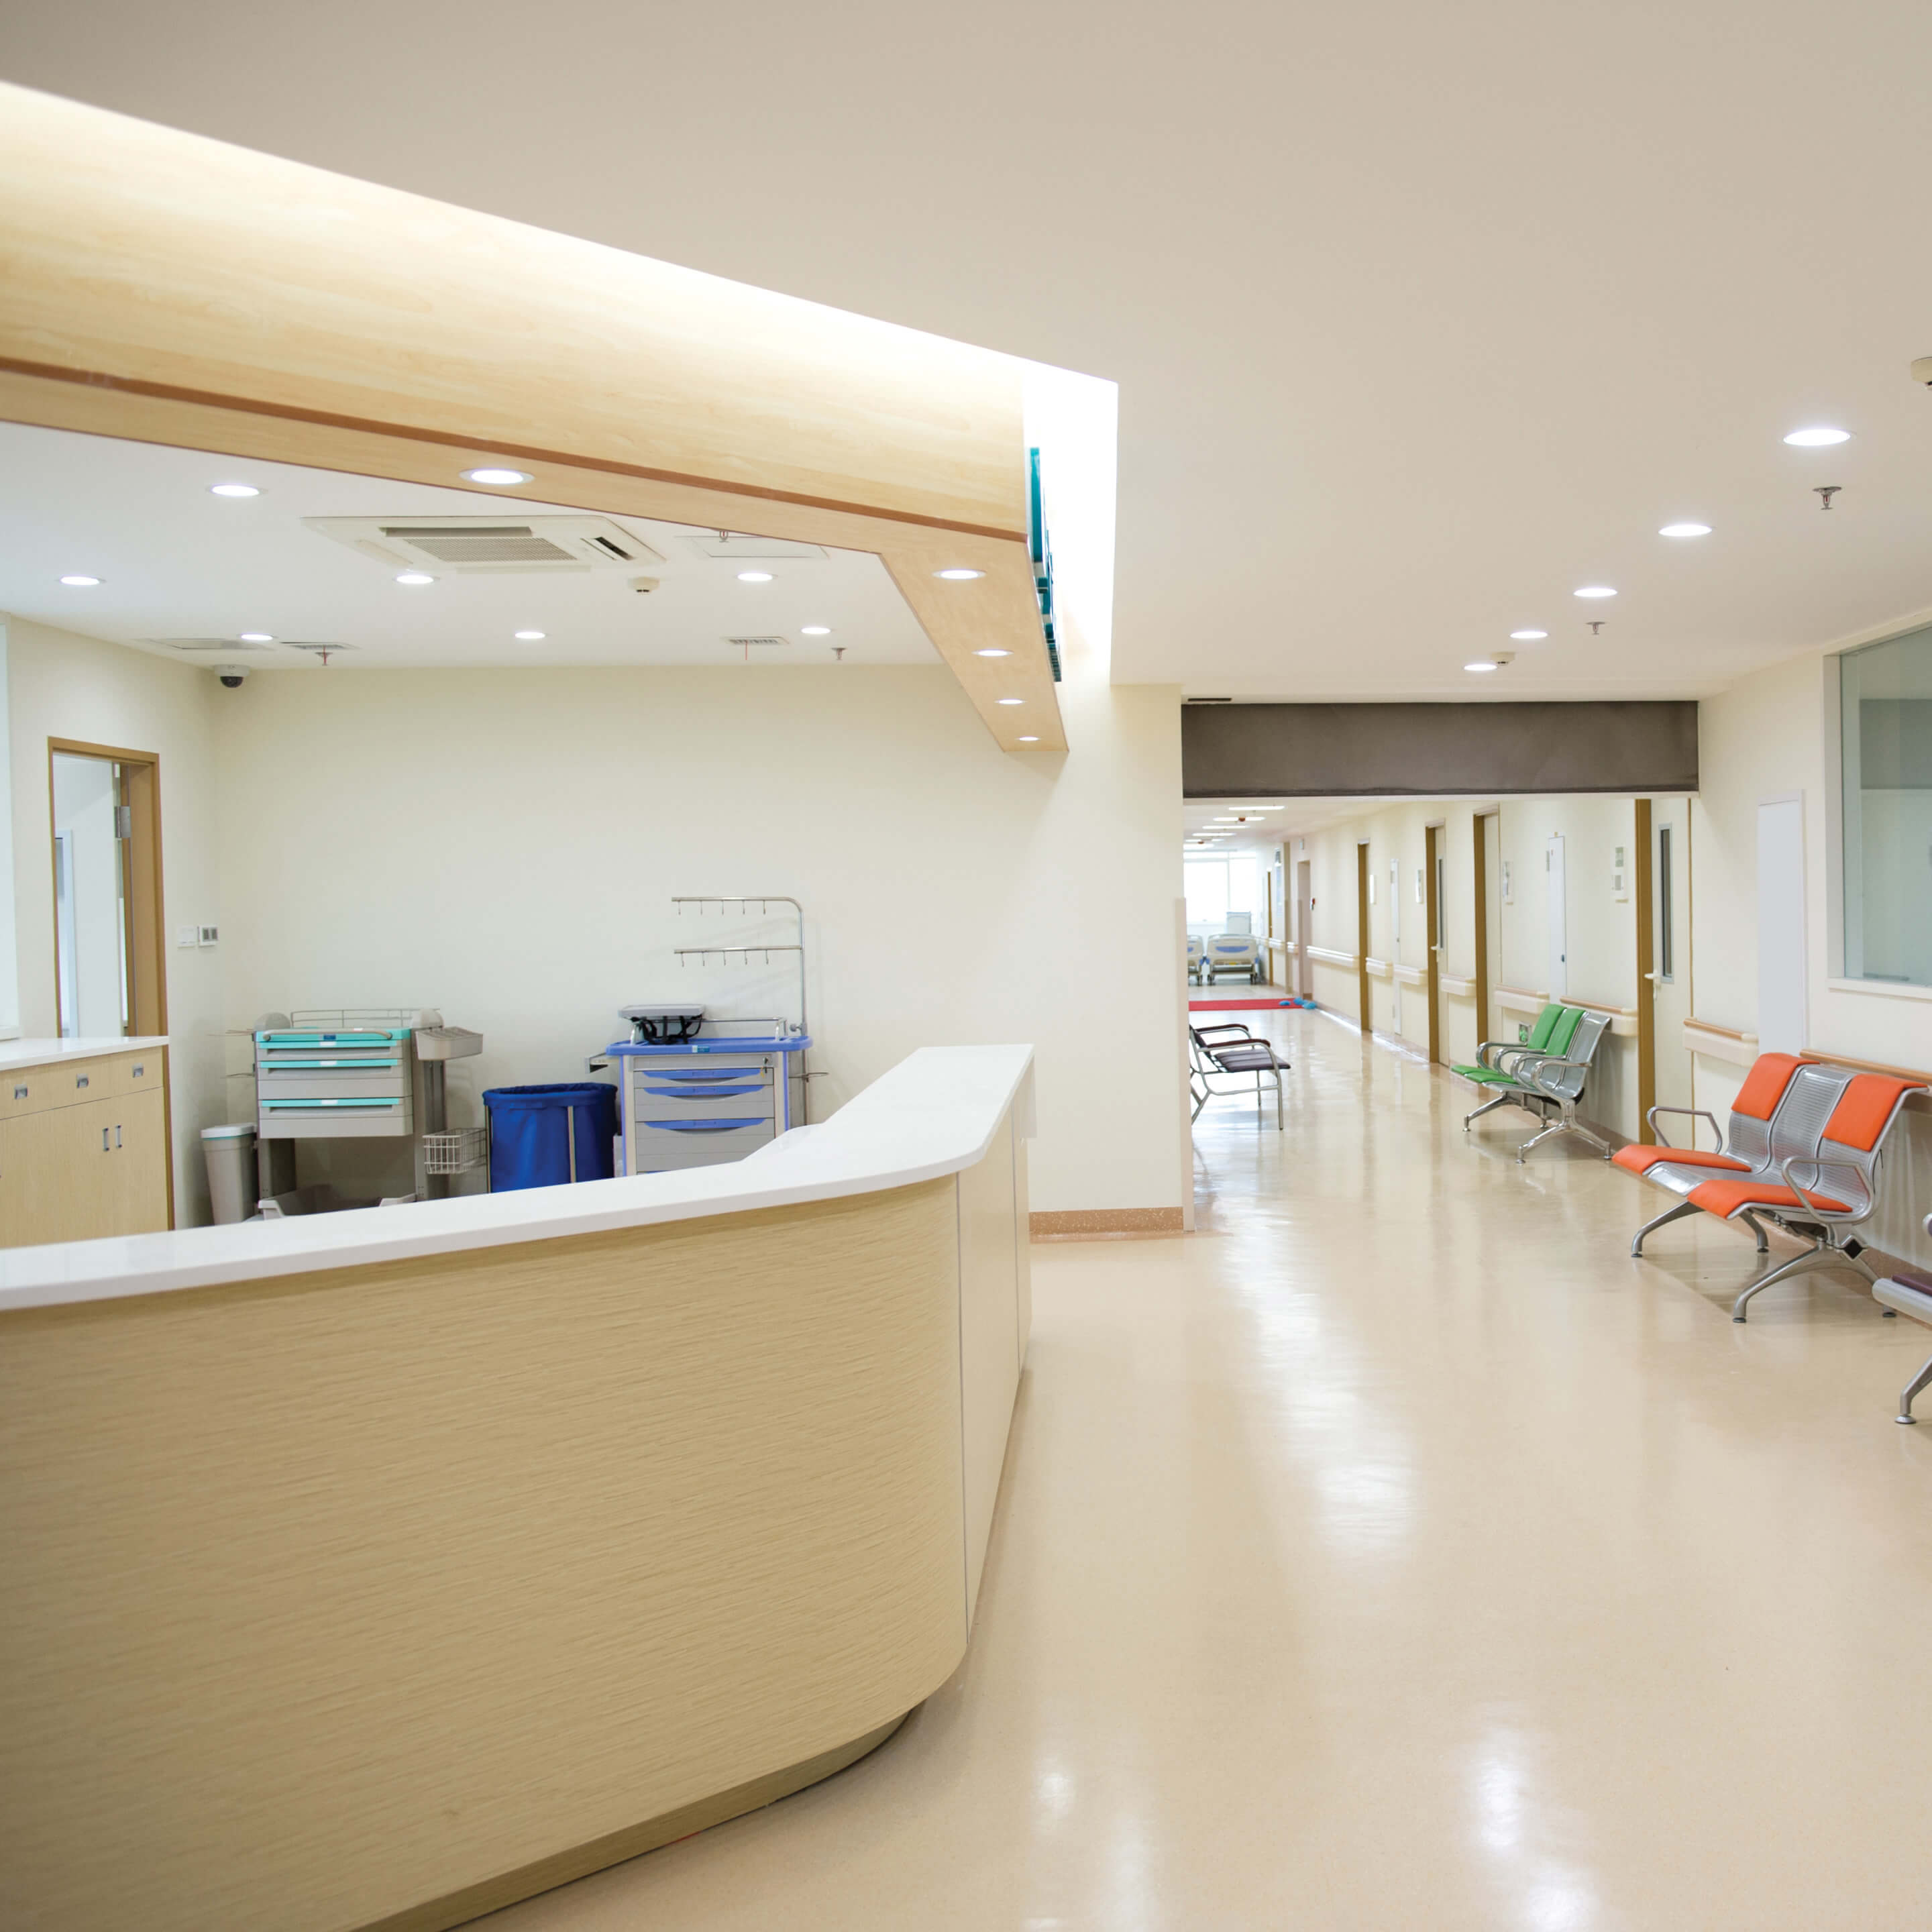 the interior of a healthcare facility